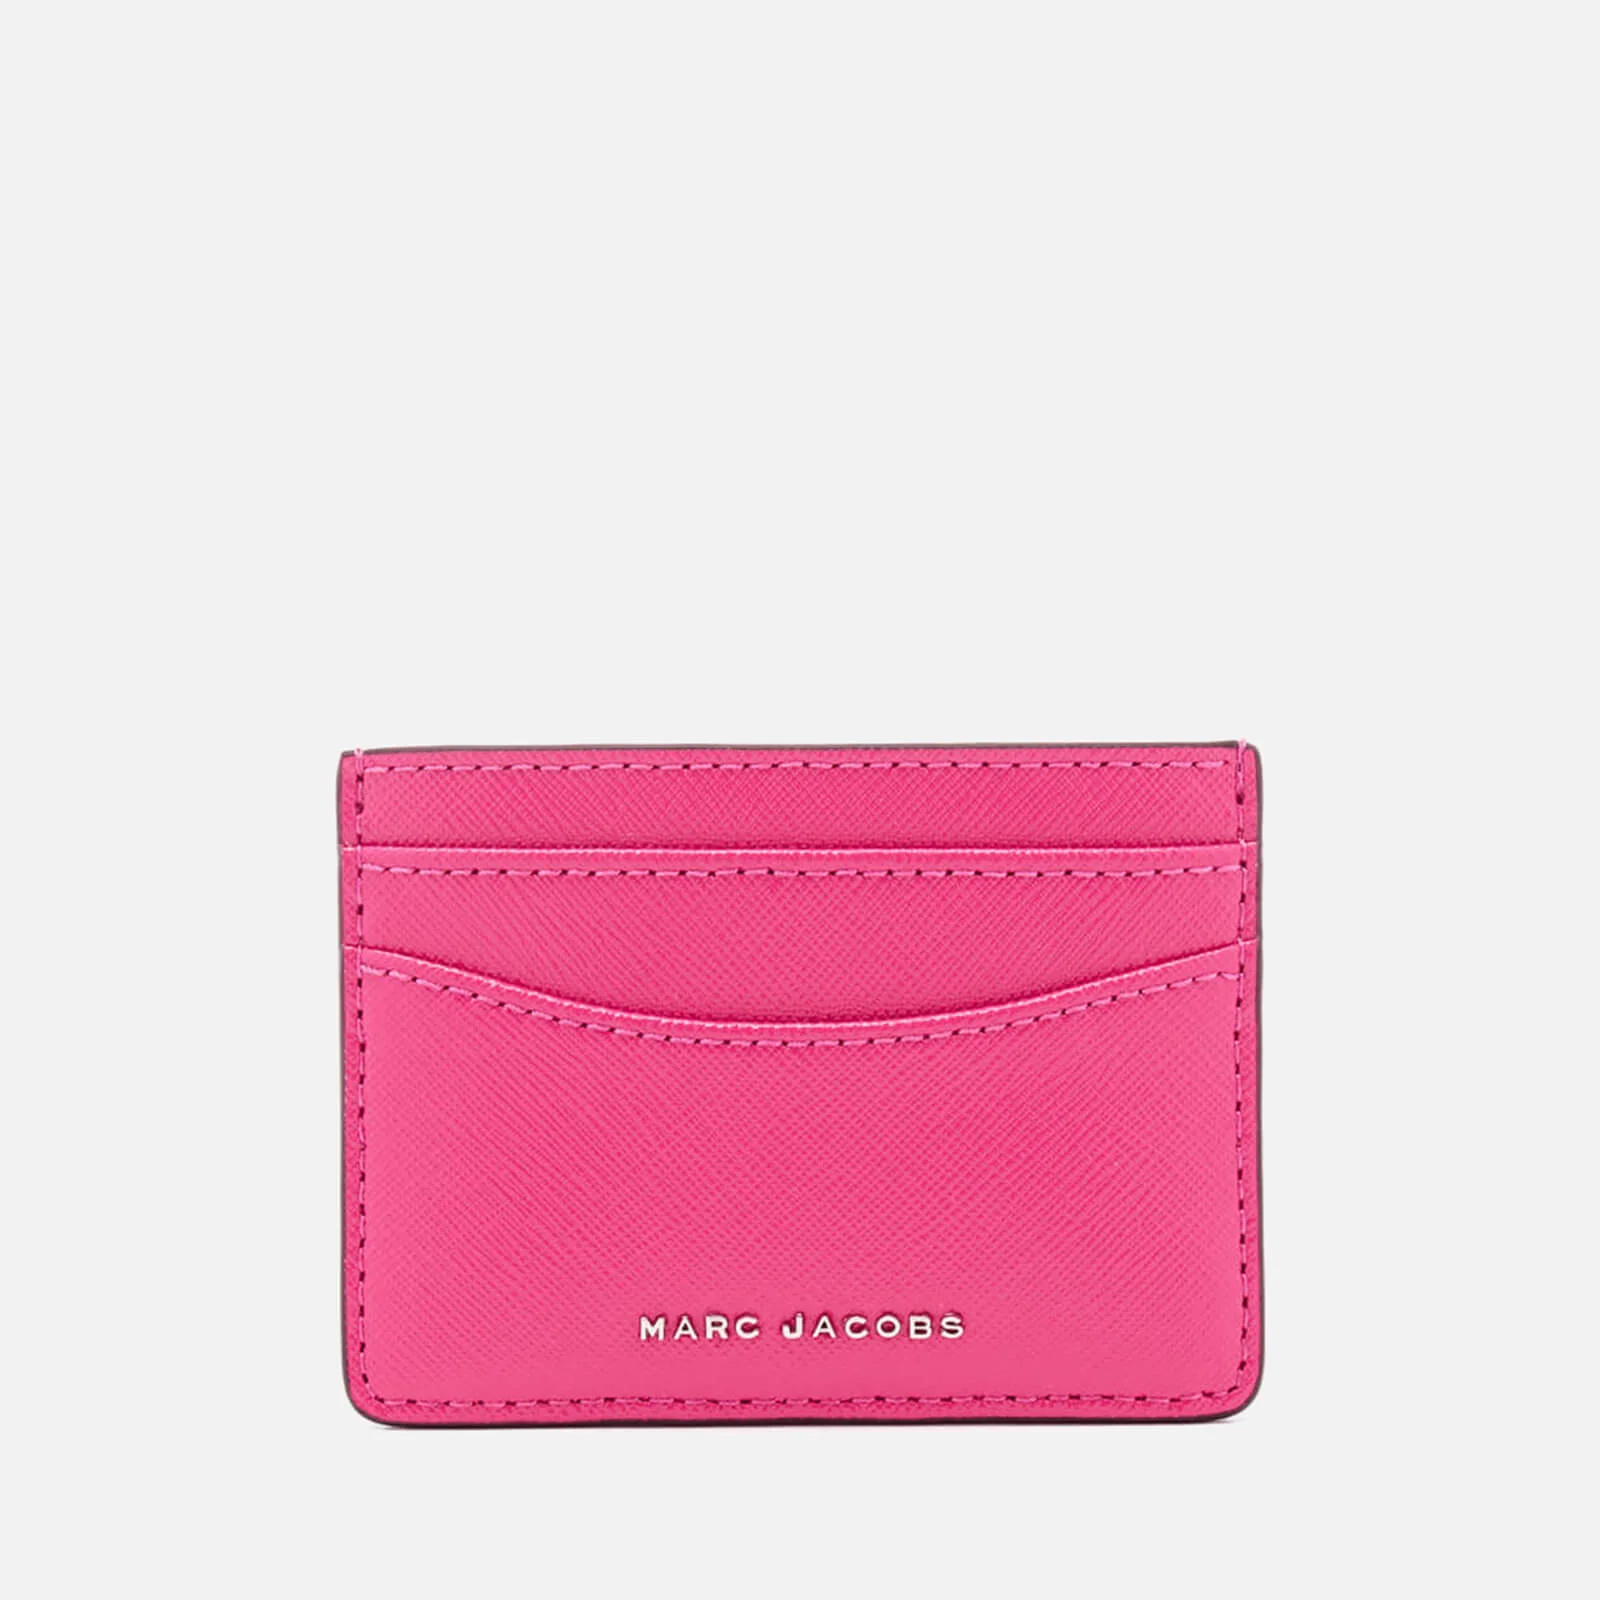 Marc Jacobs Women's Saffiano Bicolour Leather Card Case - Magenta/Pink Image 1